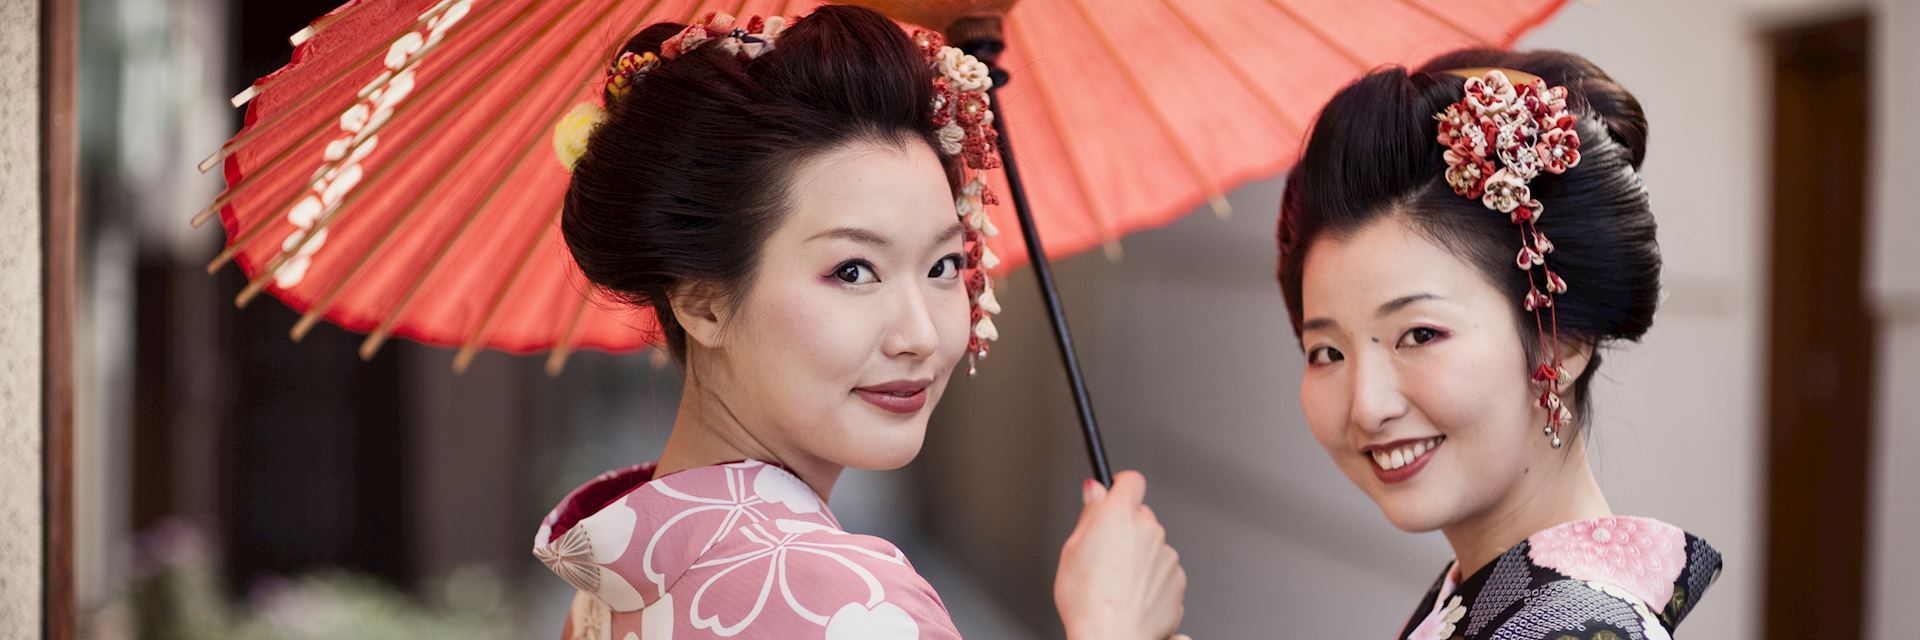 Japanese women in traditional kimonos